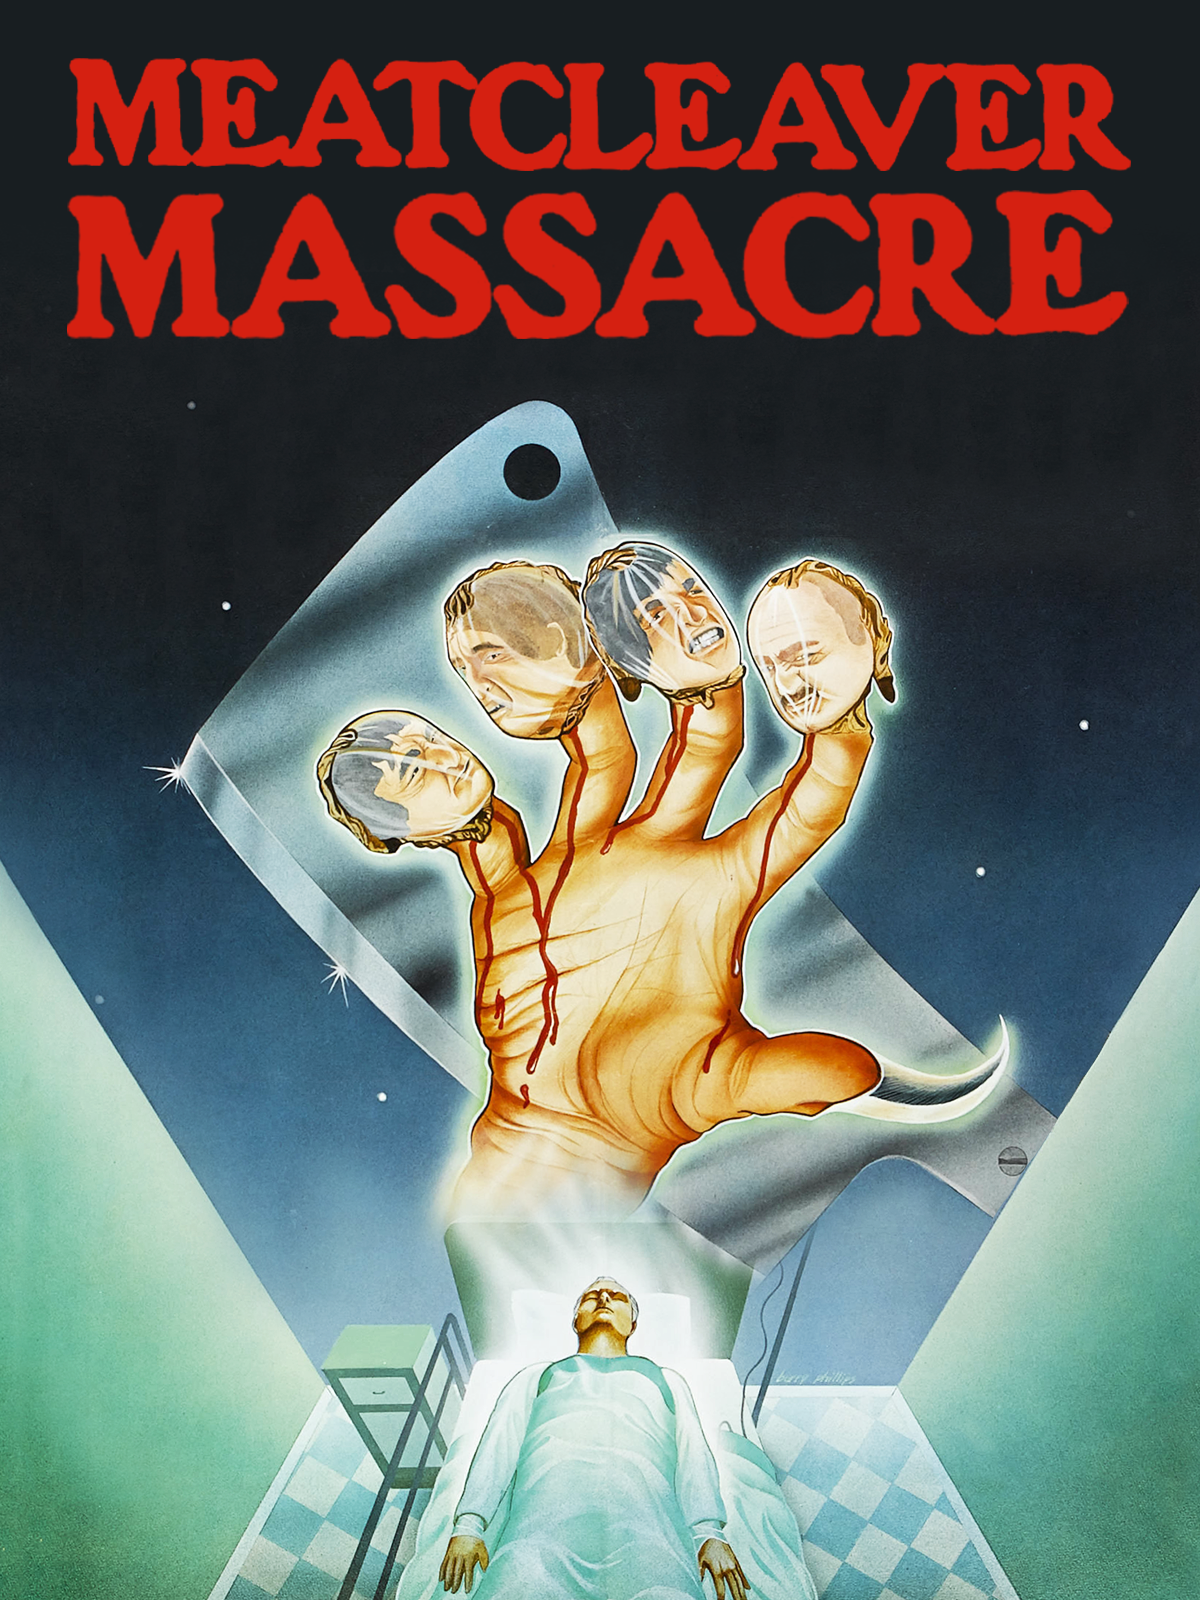 Meatcleaver Massacre_amazon_3x4_cover_art_1200x1600